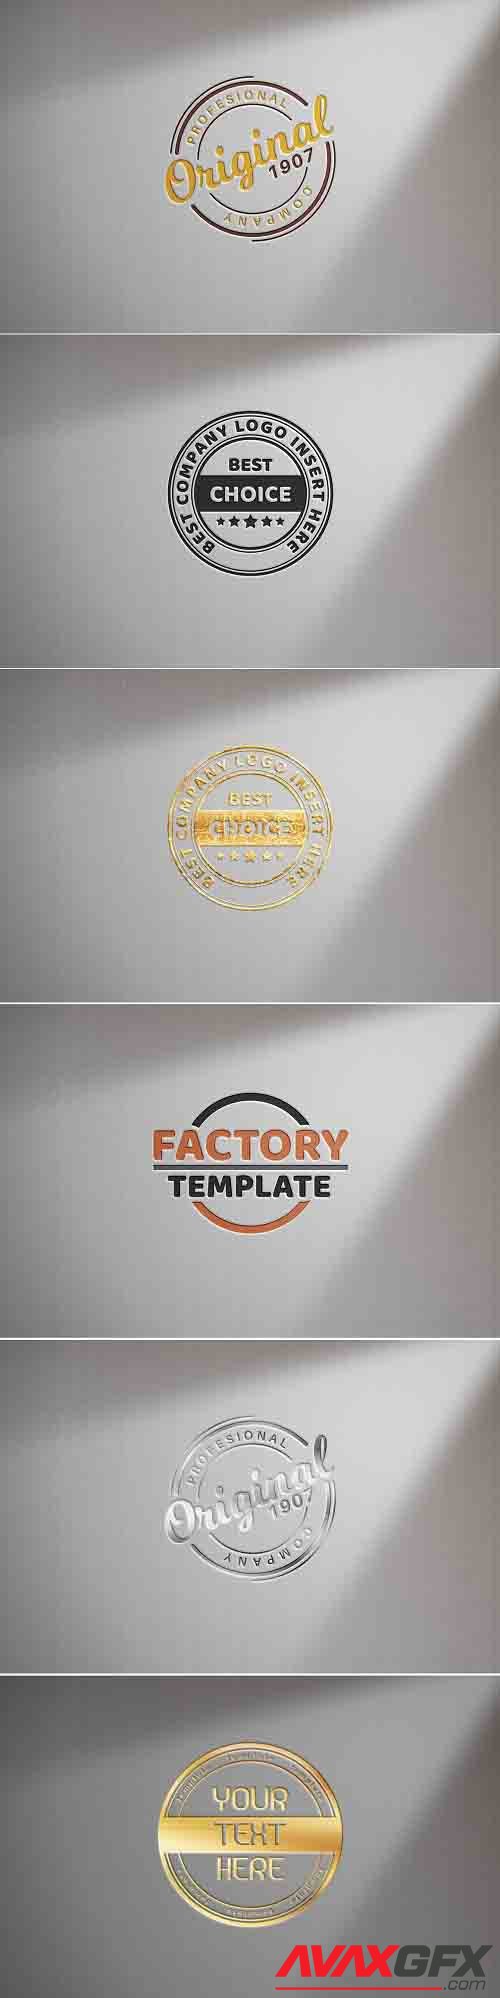 Logo on white paper - mockup template - 6172457